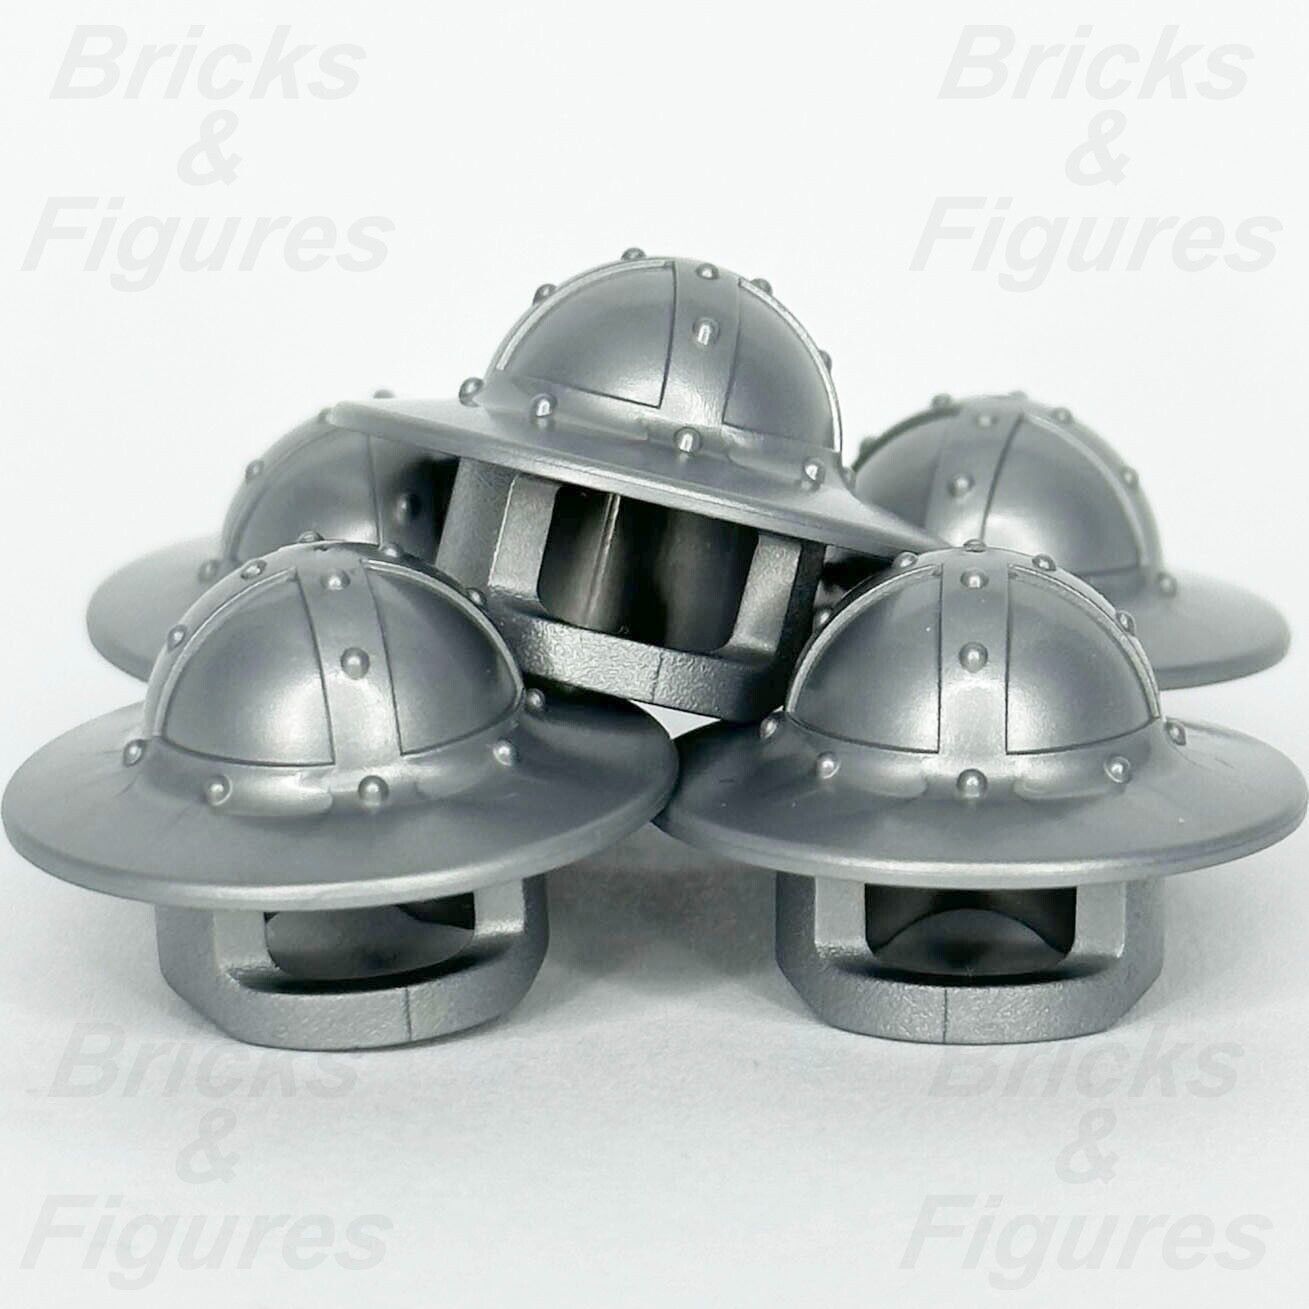 LEGO Castle Knight Chin Guard & Broad Brim Helmet Minifigure Part 30273 x 5 - Bricks & Figures